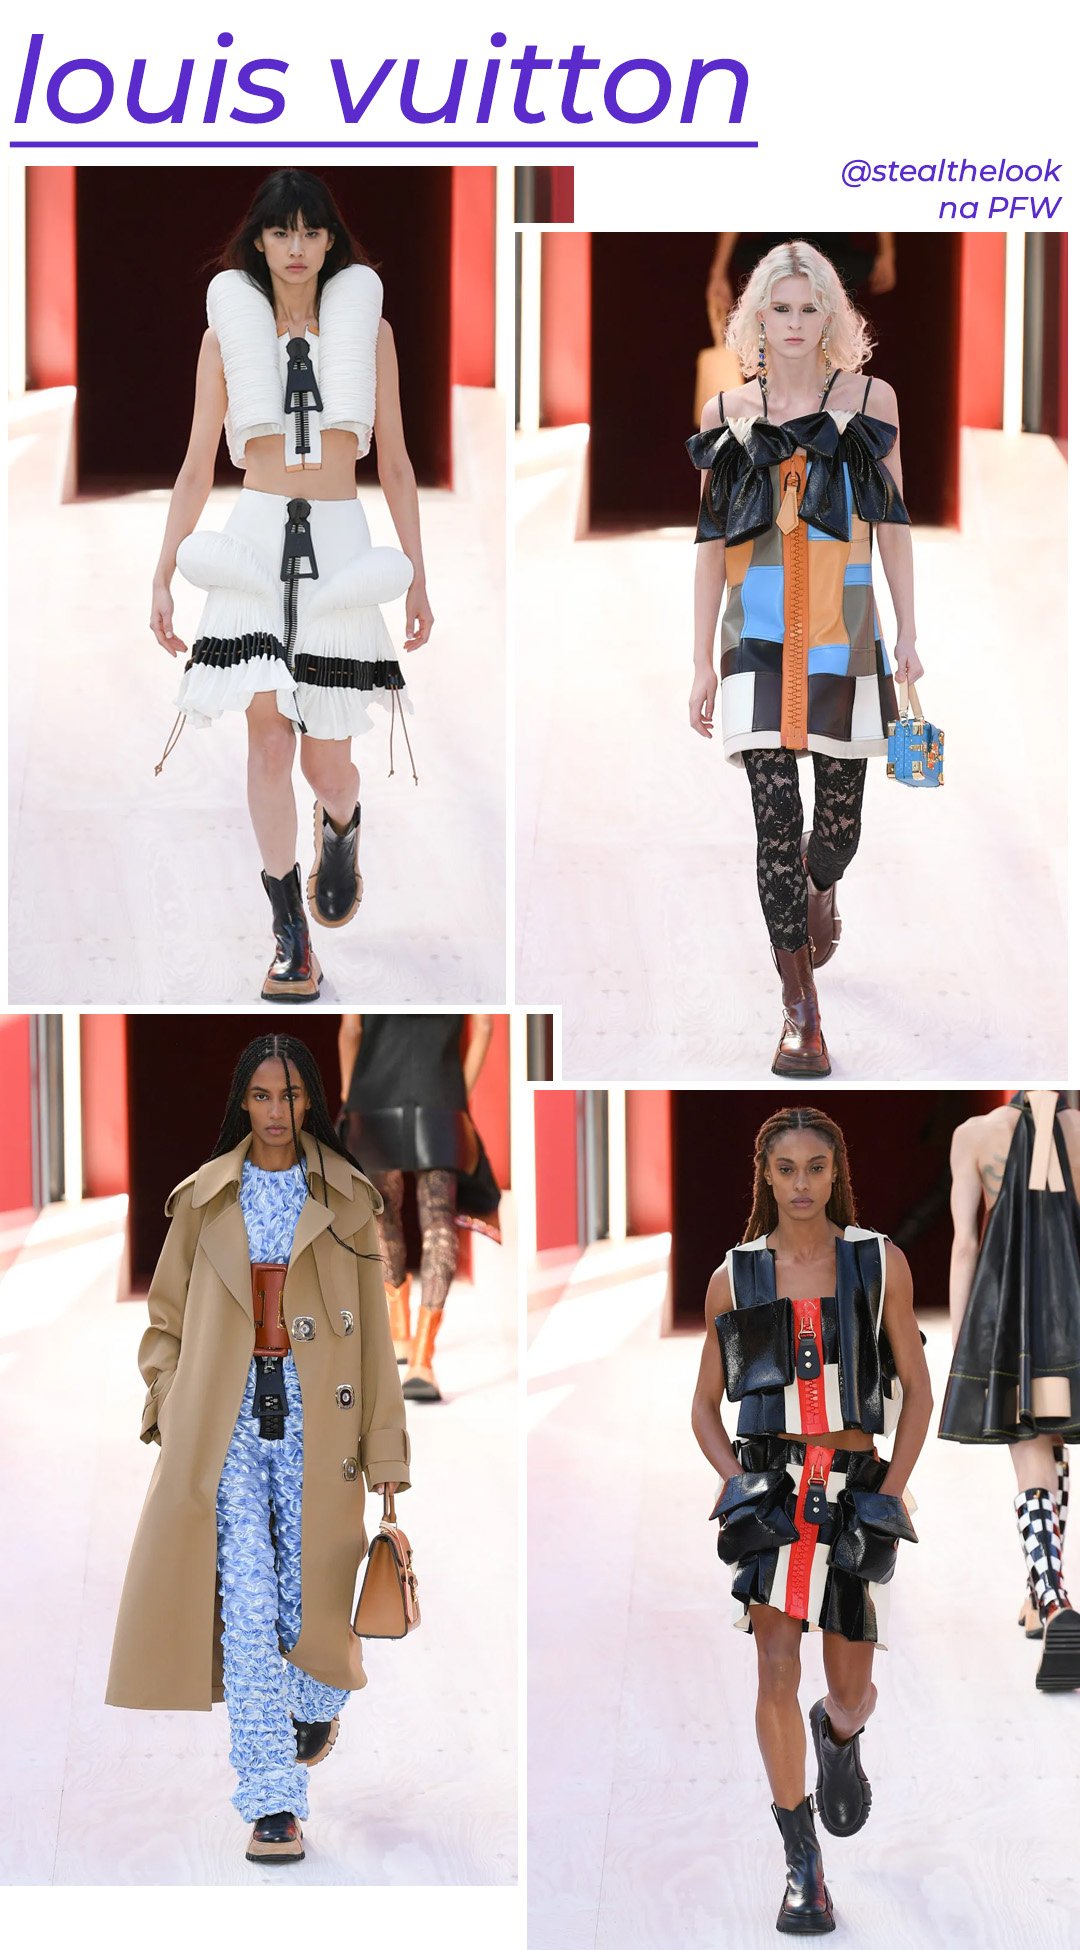 Louis Vuitton S/S 2023 - roupas diversas - Paris Fashion Week - Primavera - modelo andando pela passarela - https://stealthelook.com.br